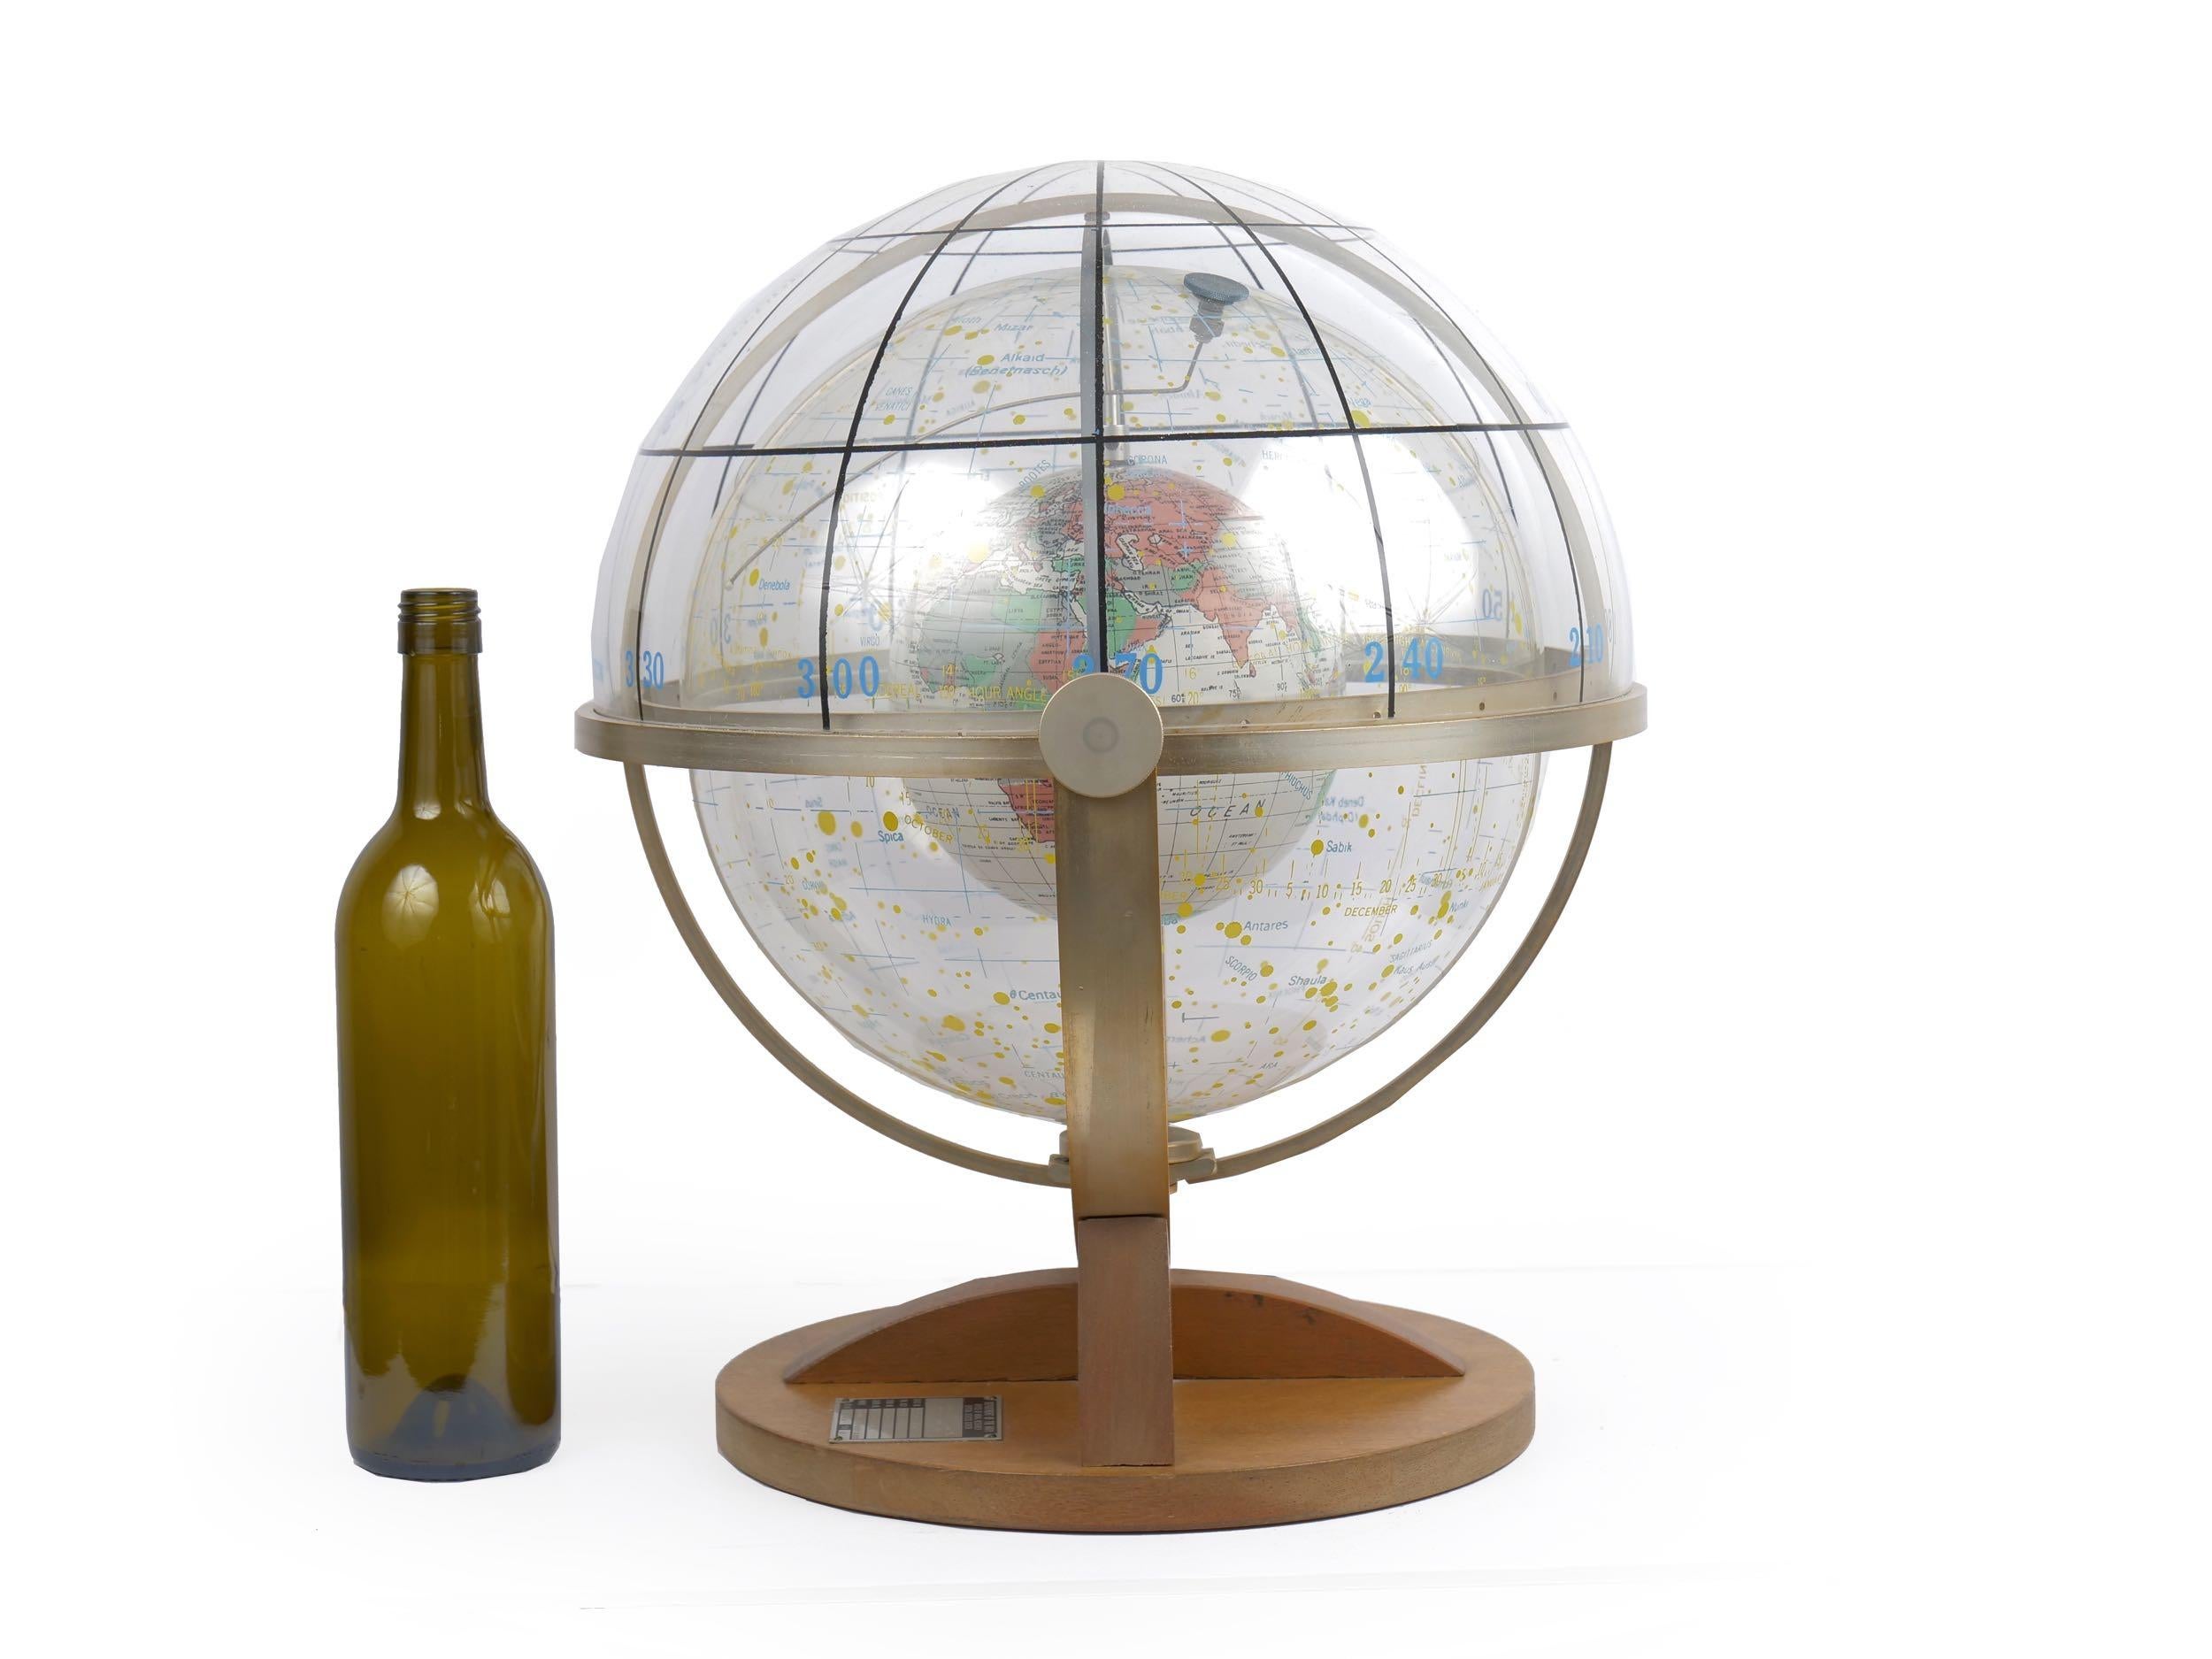 American Farquhar Celestial Navigation Armillary Sphere Globe for Dept. of Navy